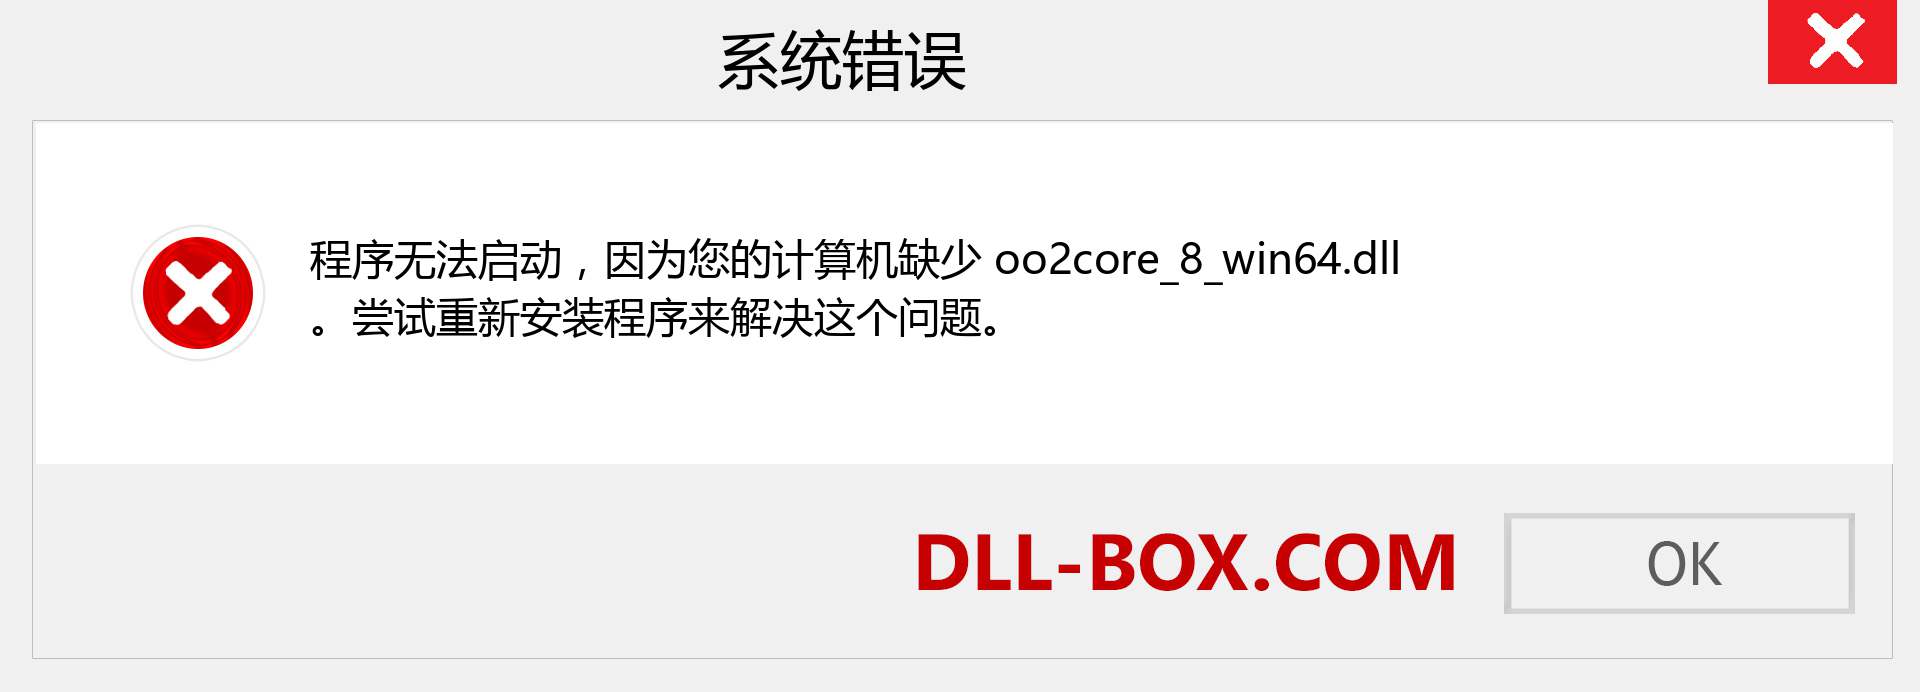 oo2core_8_win64.dll 文件丢失？。 适用于 Windows 7、8、10 的下载 - 修复 Windows、照片、图像上的 oo2core_8_win64 dll 丢失错误